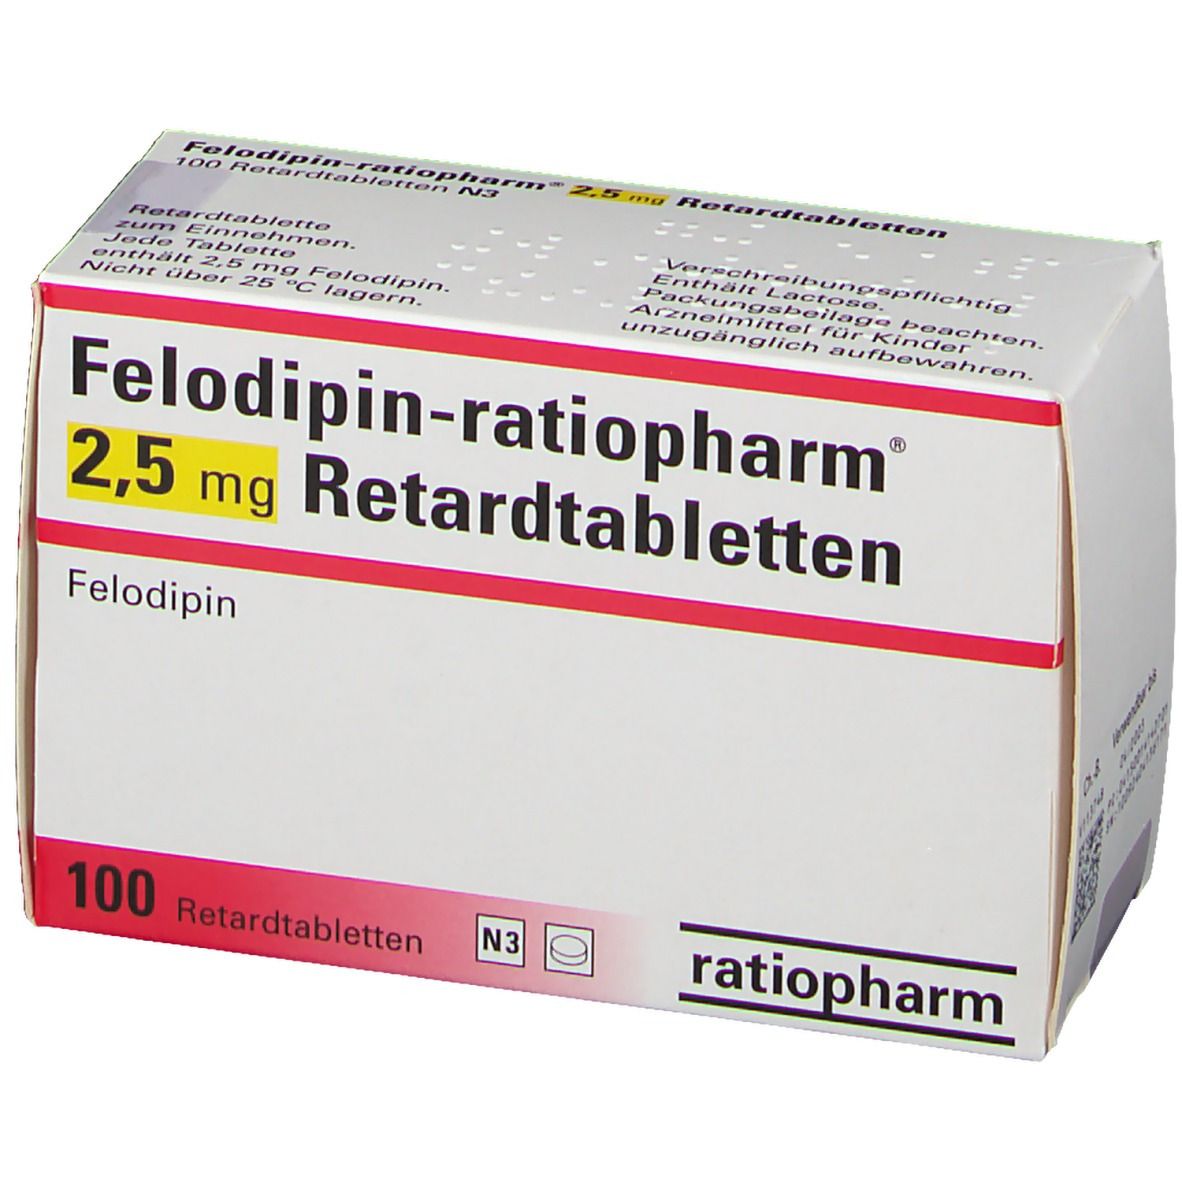 Felodipin-ratiopharm® 2,5 mg